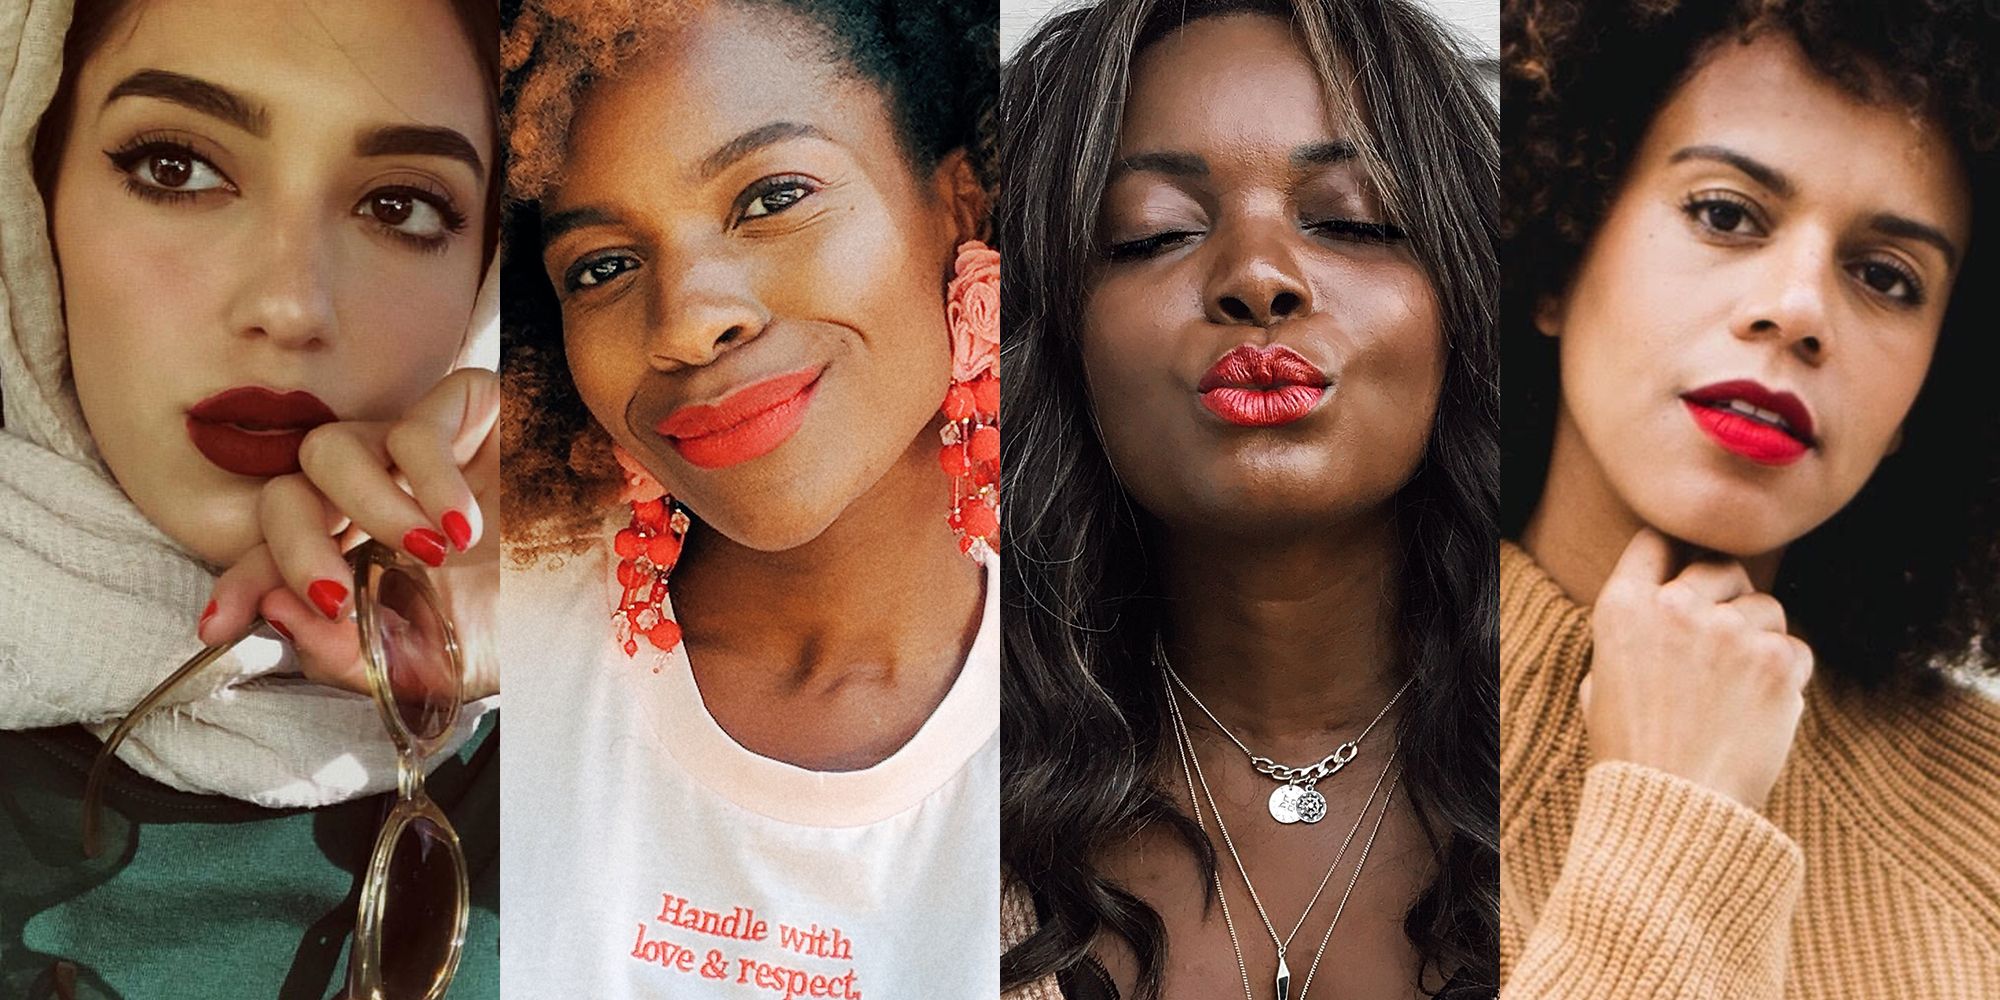 Best Red Lipsticks for Women of Color - Red Lipsticks for Darker